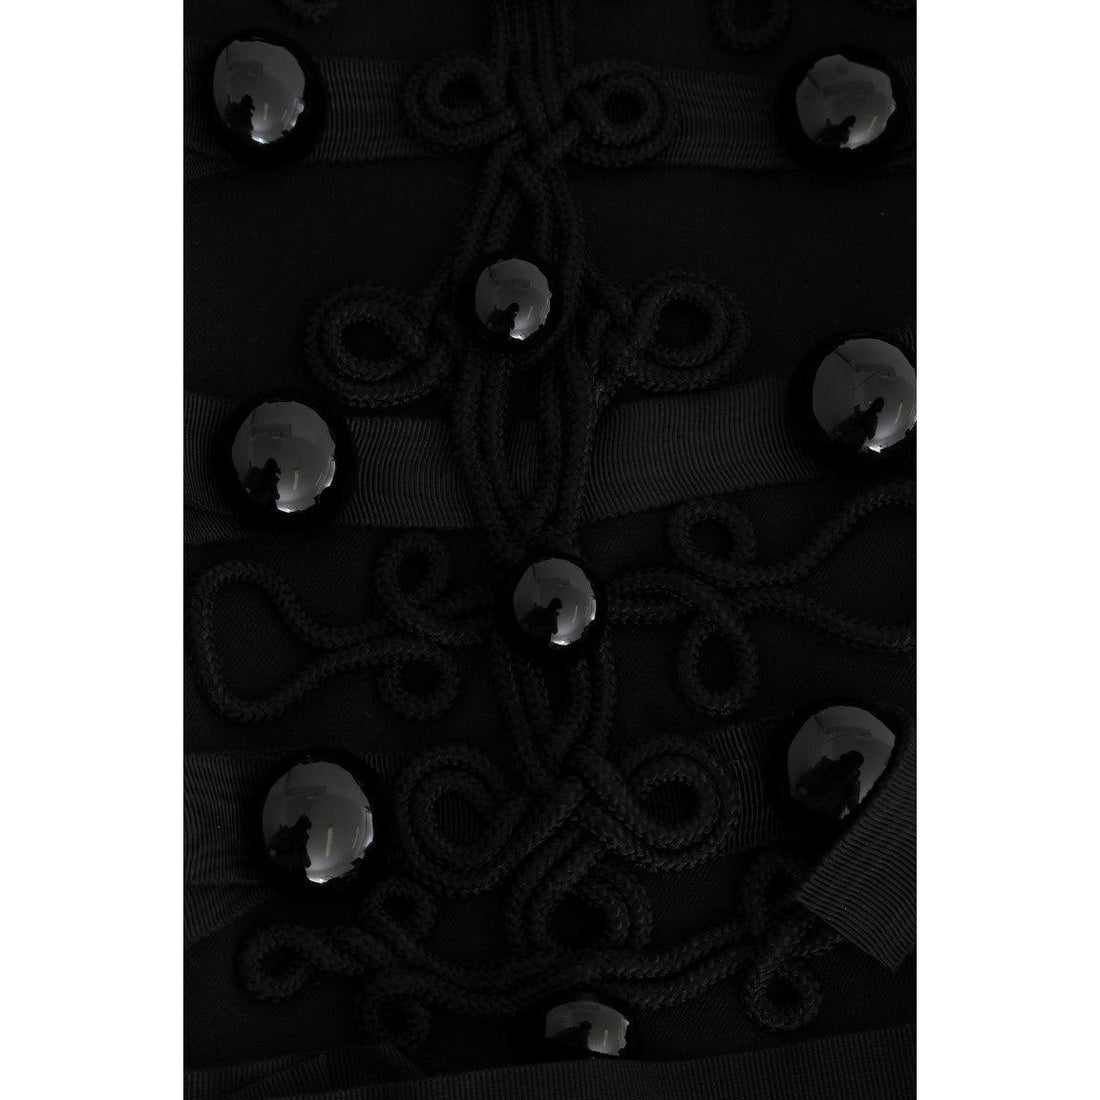 Dolce & Gabbana Black Wool Trench Jacket - Paris Deluxe